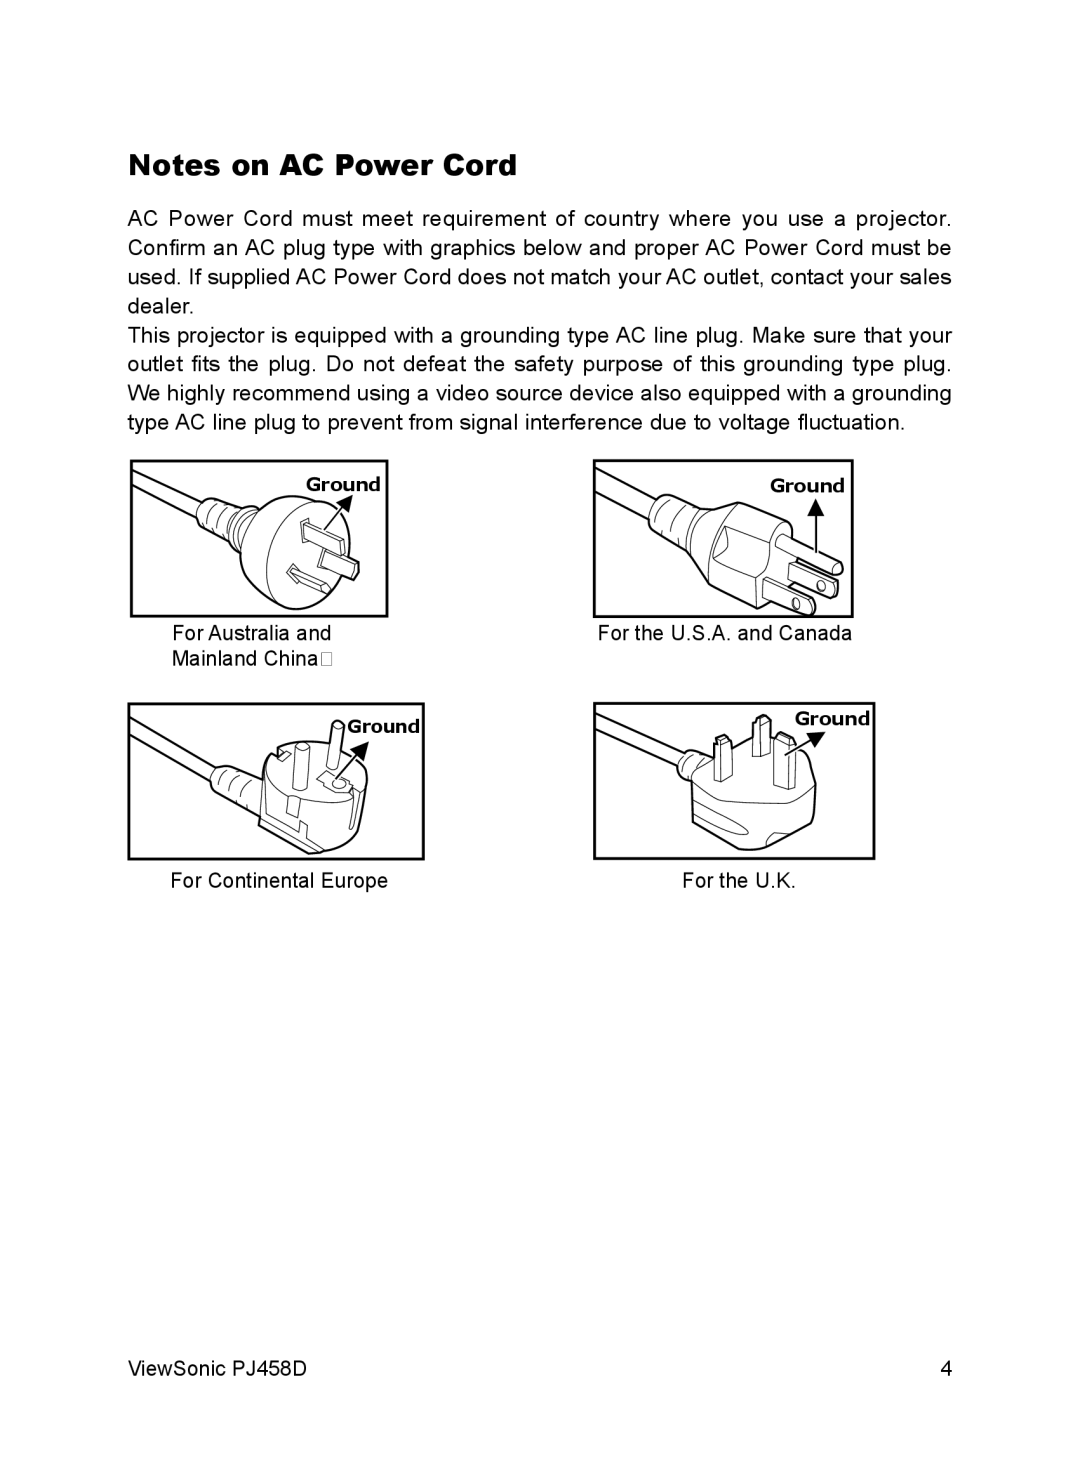 ViewSonic PJ458D manual Notes on AC Power Cord 